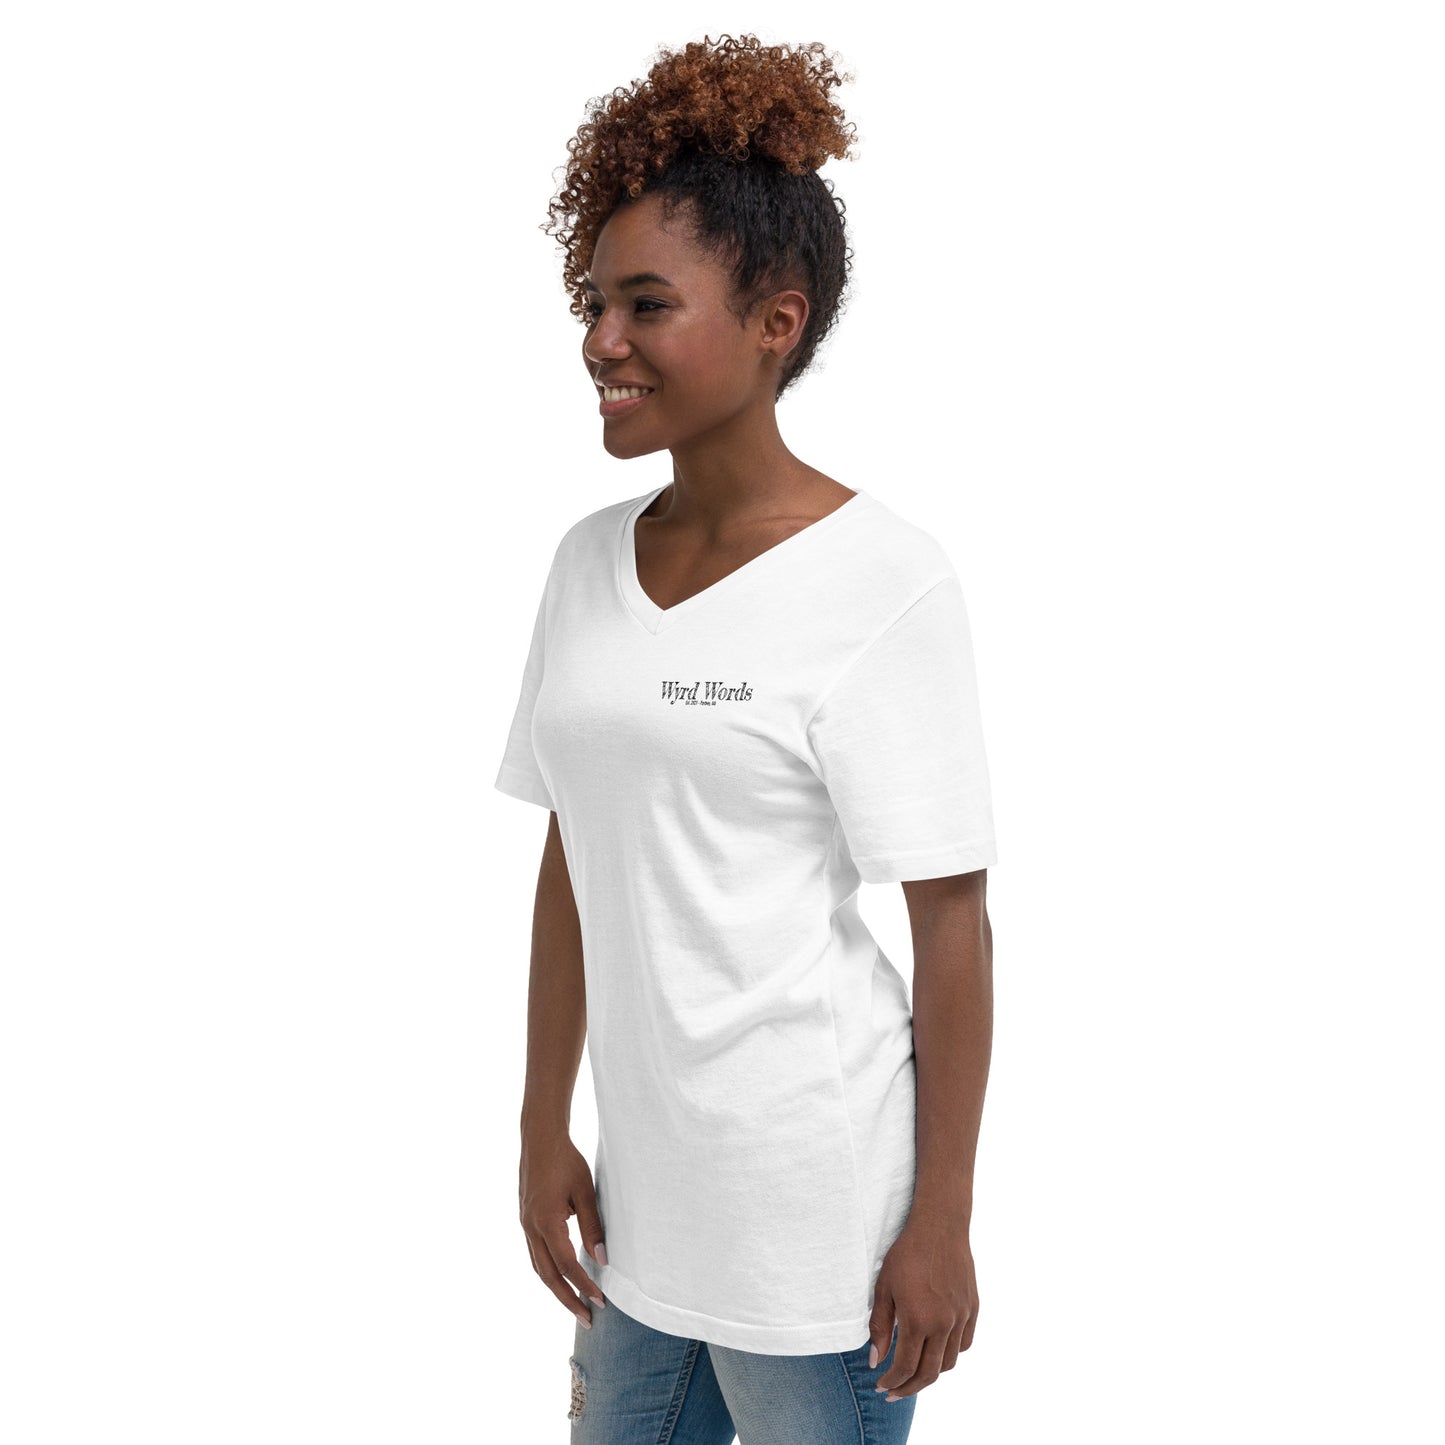 Wyrd Words Back Logo Unisex Short Sleeve V-Neck T-Shirt